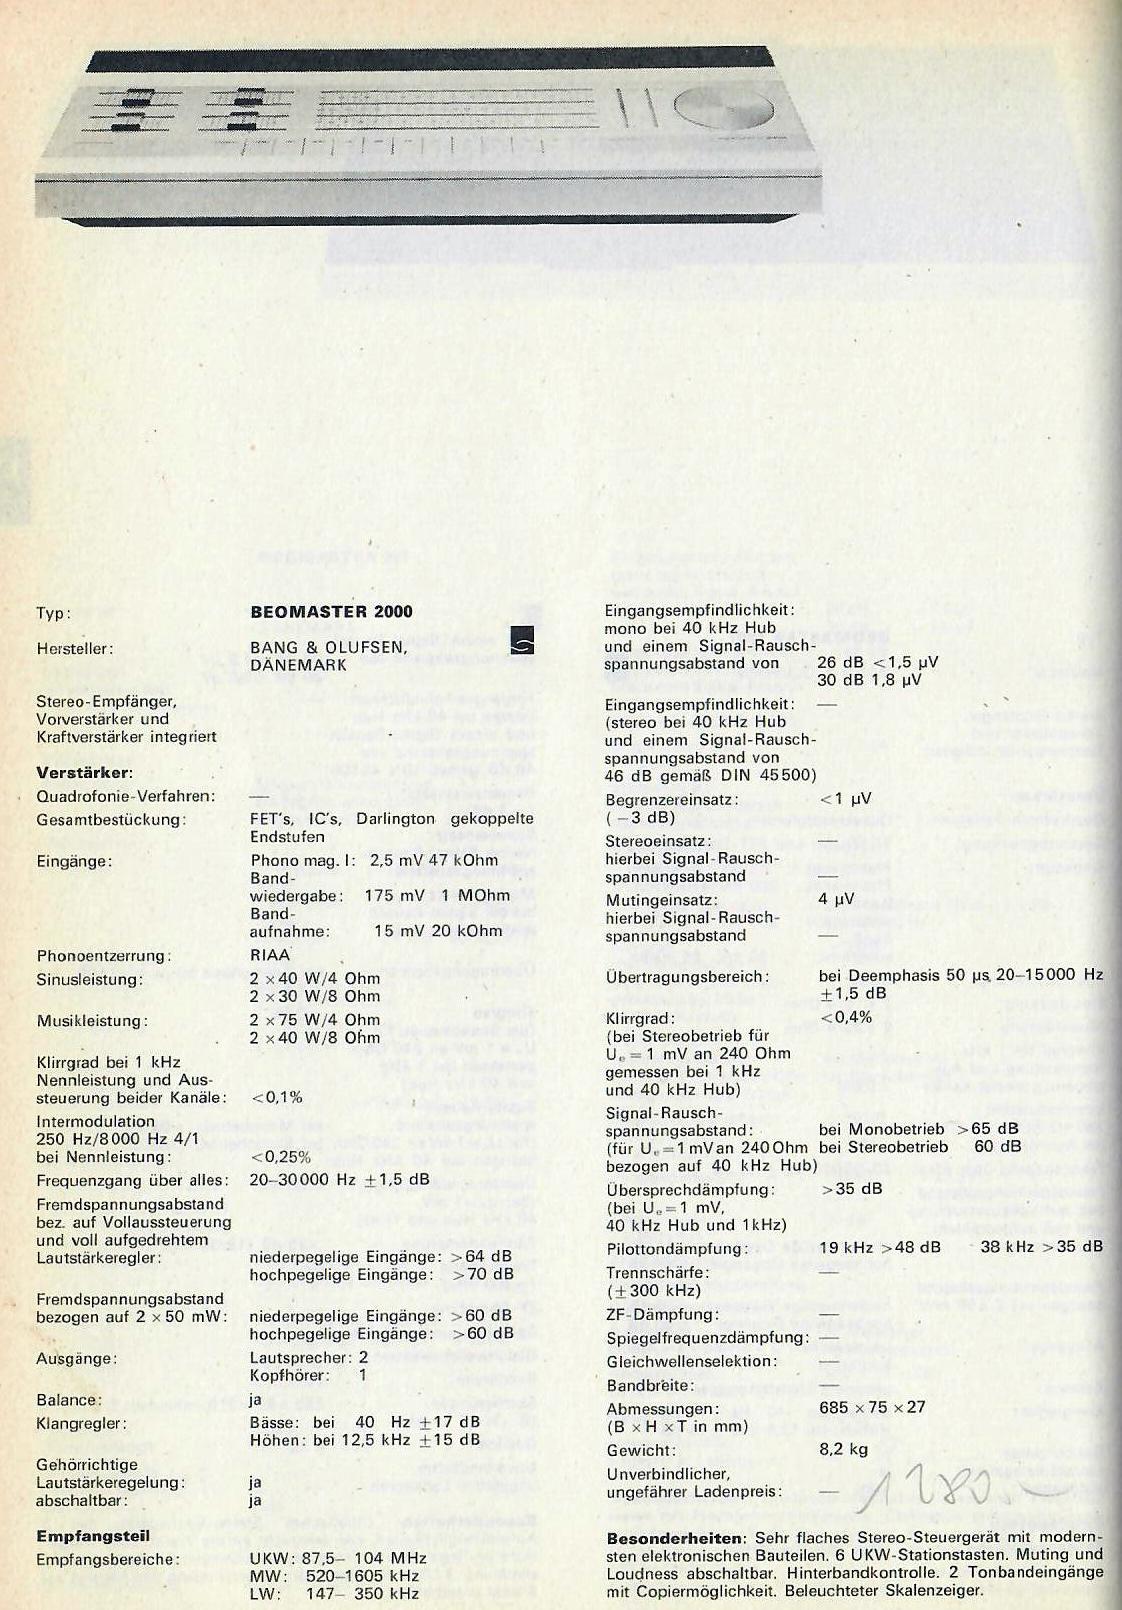 Bang & Olufsen Beomaster 2000-Daten.jpg